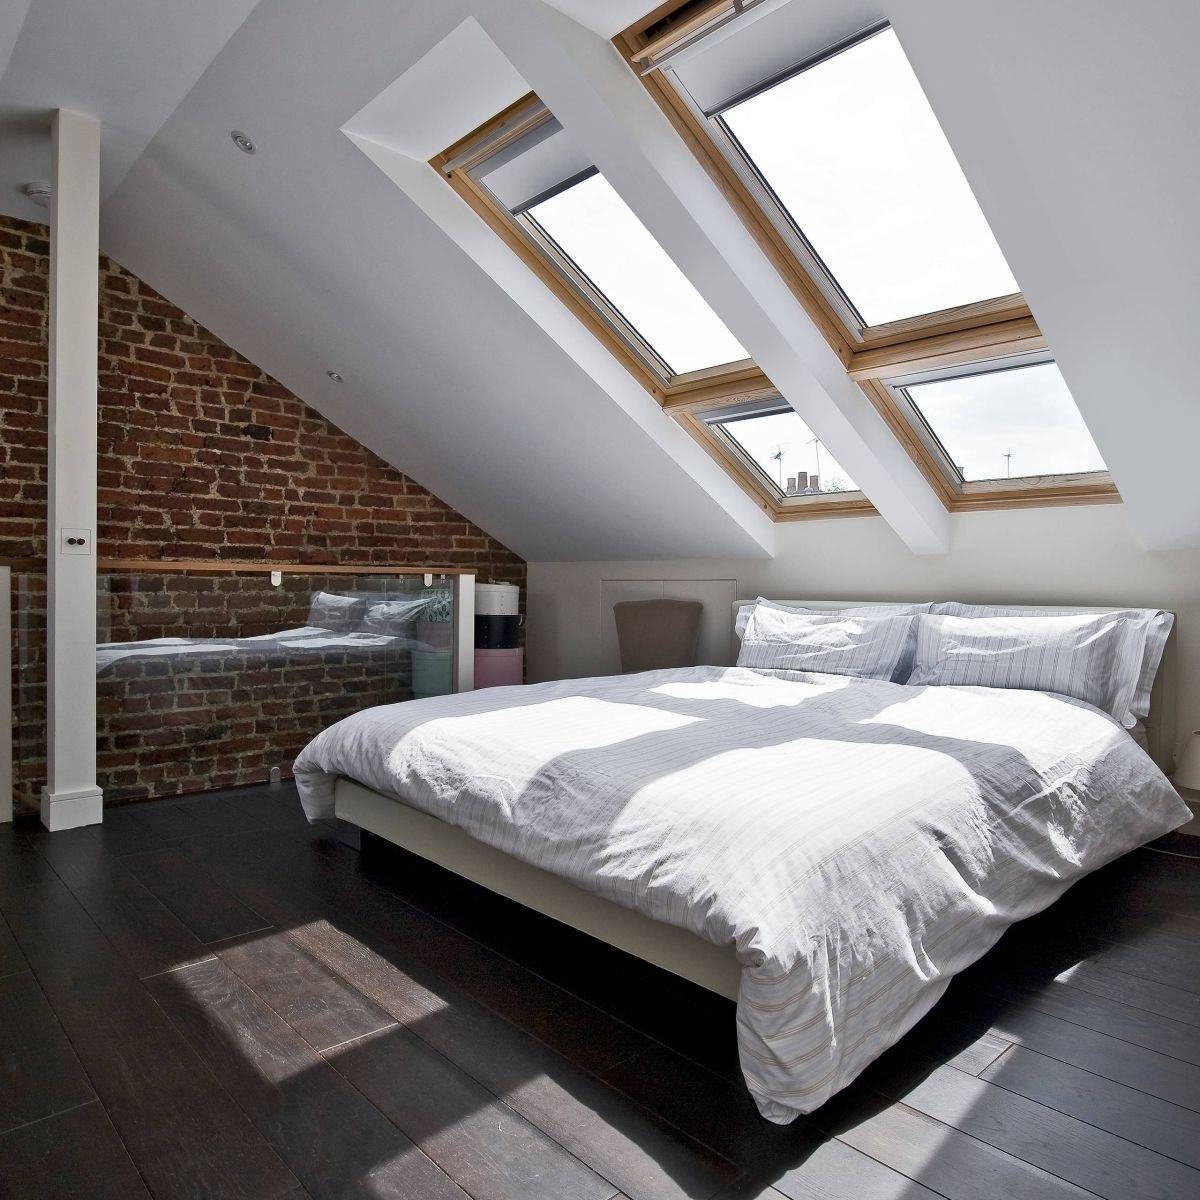 Delightful loft style bedroom also embraces contemporary aesthetics